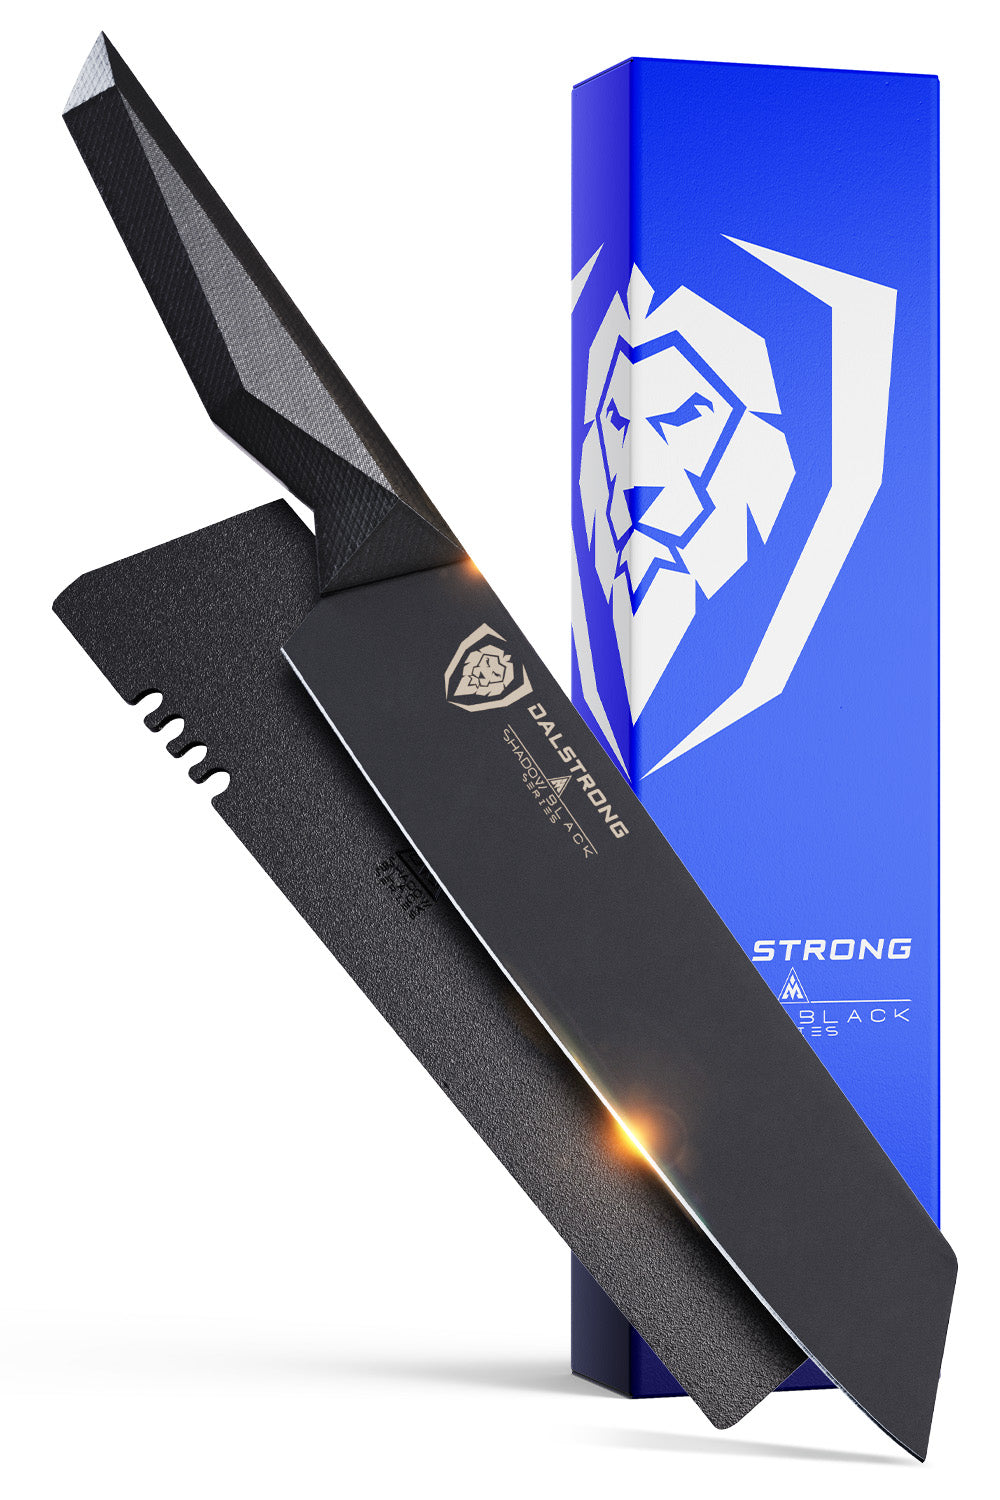 Kiritsuke Chef's Knife 8.5" | Shadow Black Series | NSF Certified | Dalstrong ©